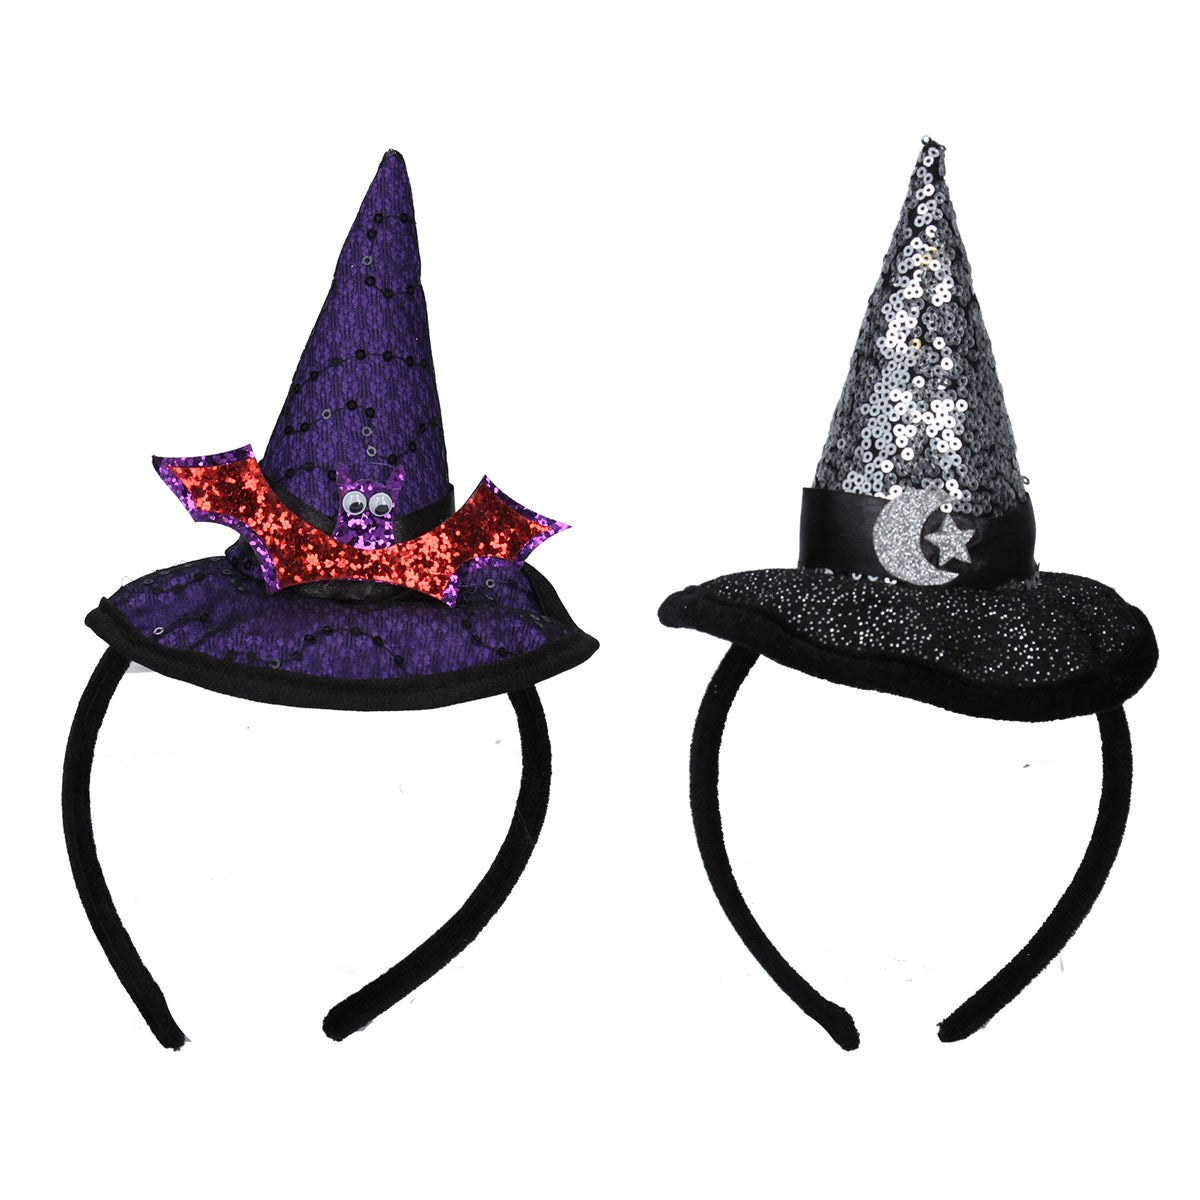 Witch hat hairband/headband